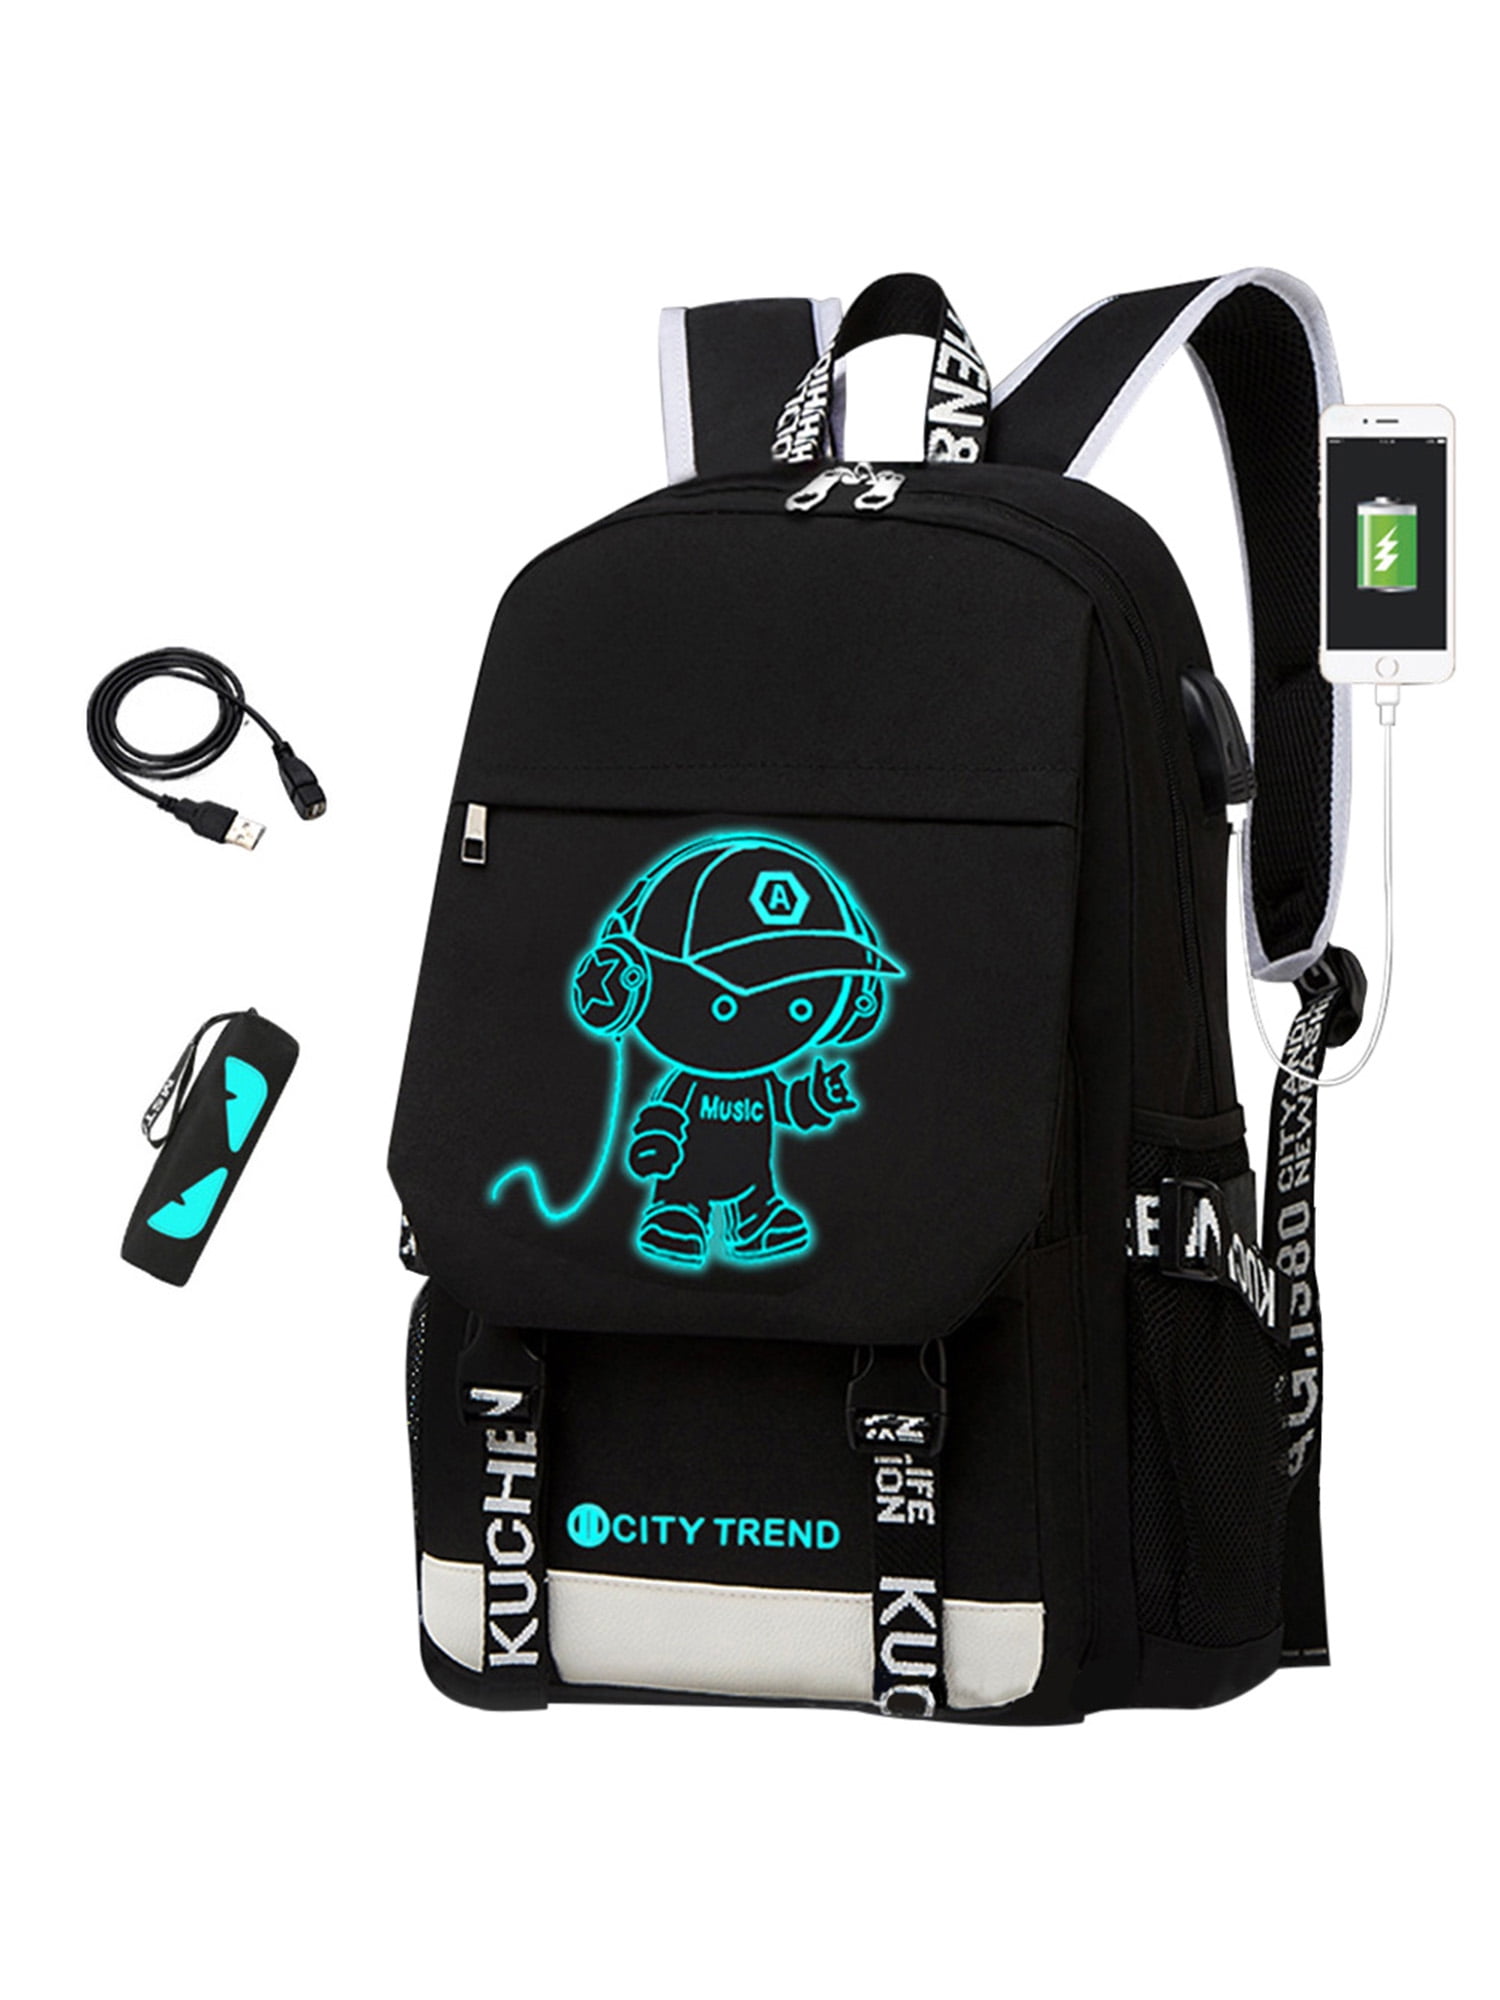 Luminous Men Boys Backpack School Loptop Bag Anime Bookbag w USB